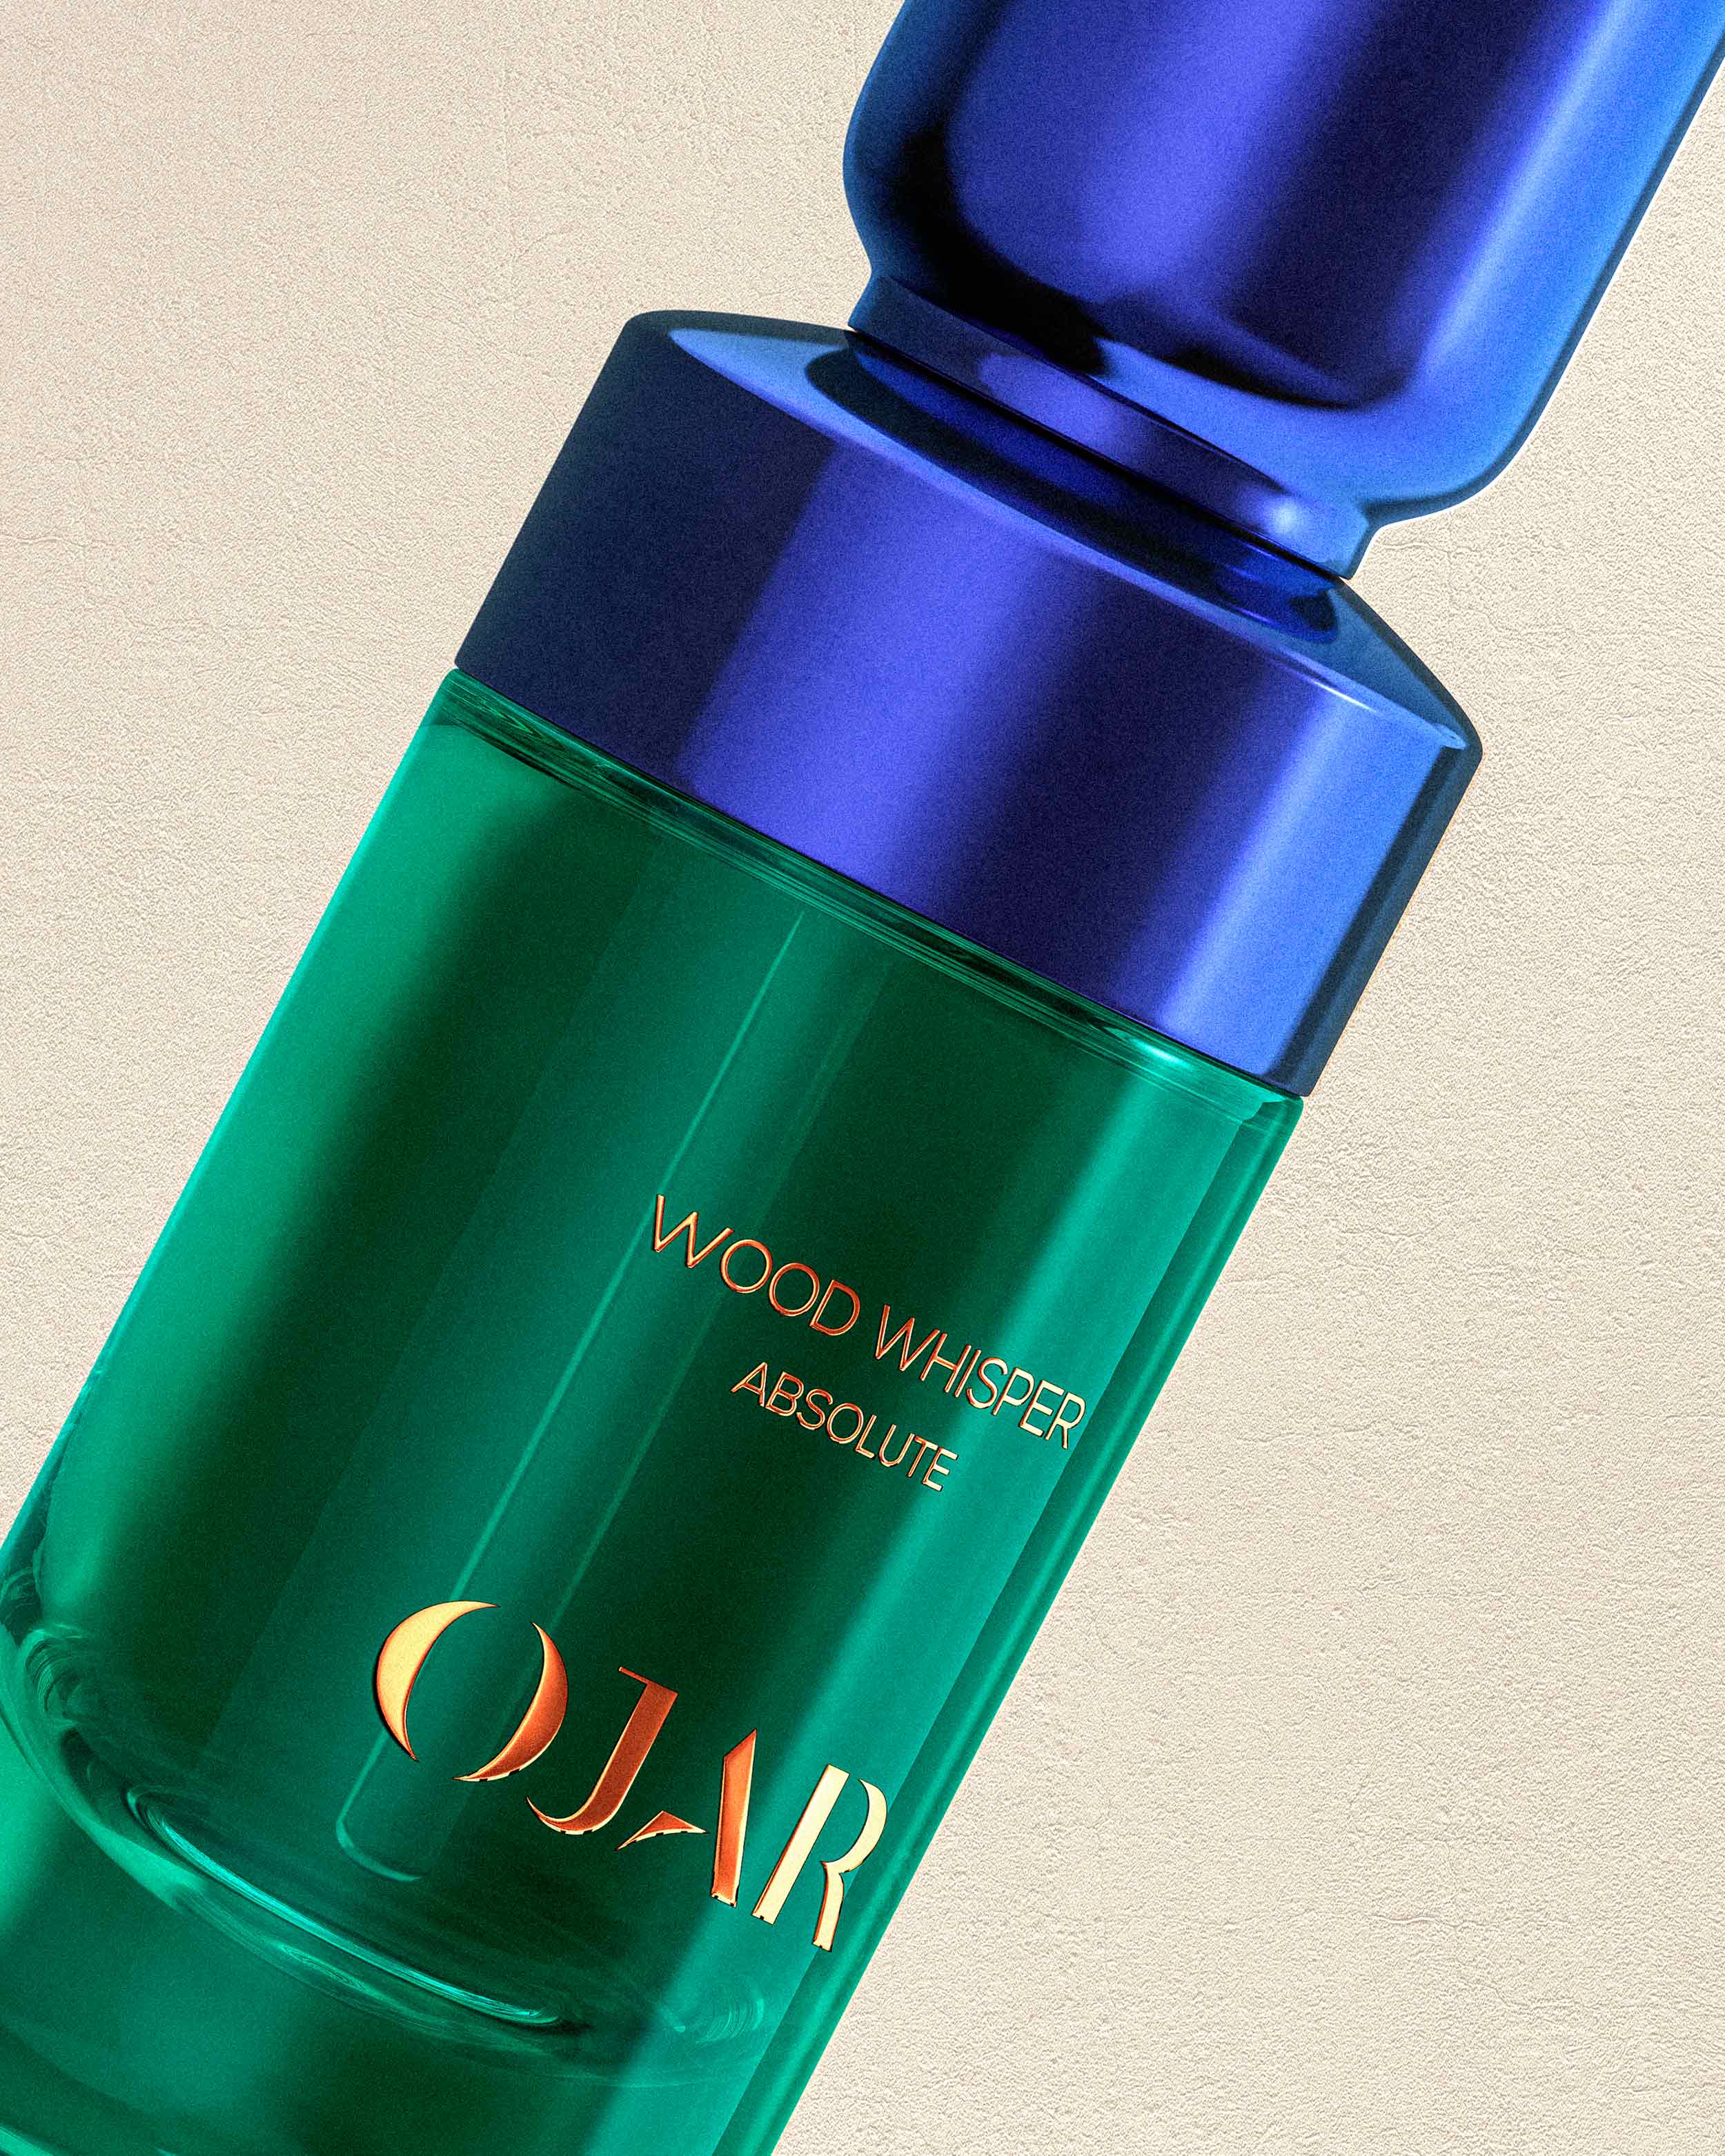 OJAR Absolute Wood Whisper Perfume Close Up